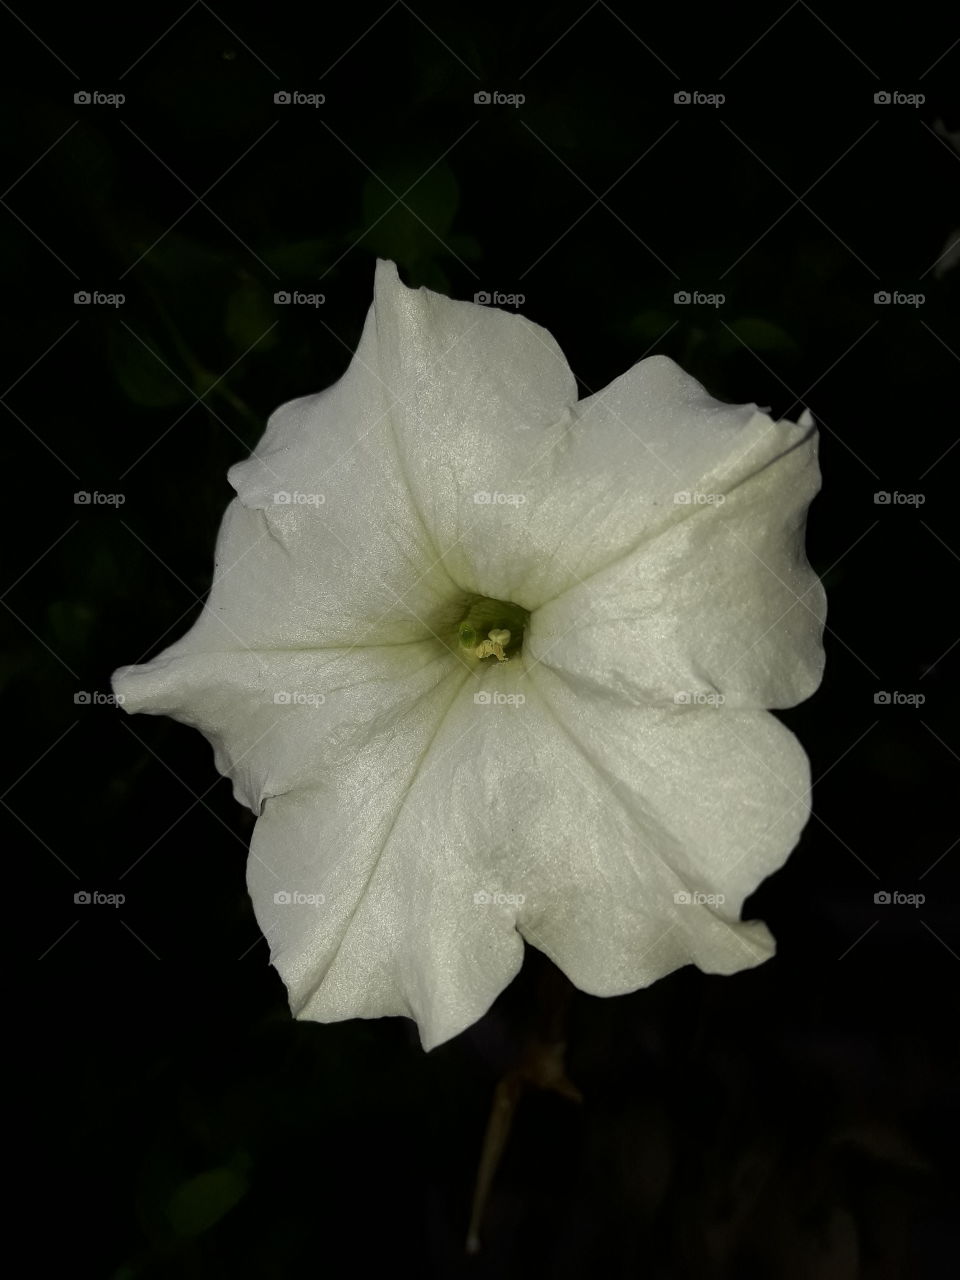 white delicate petal flower in the dark.